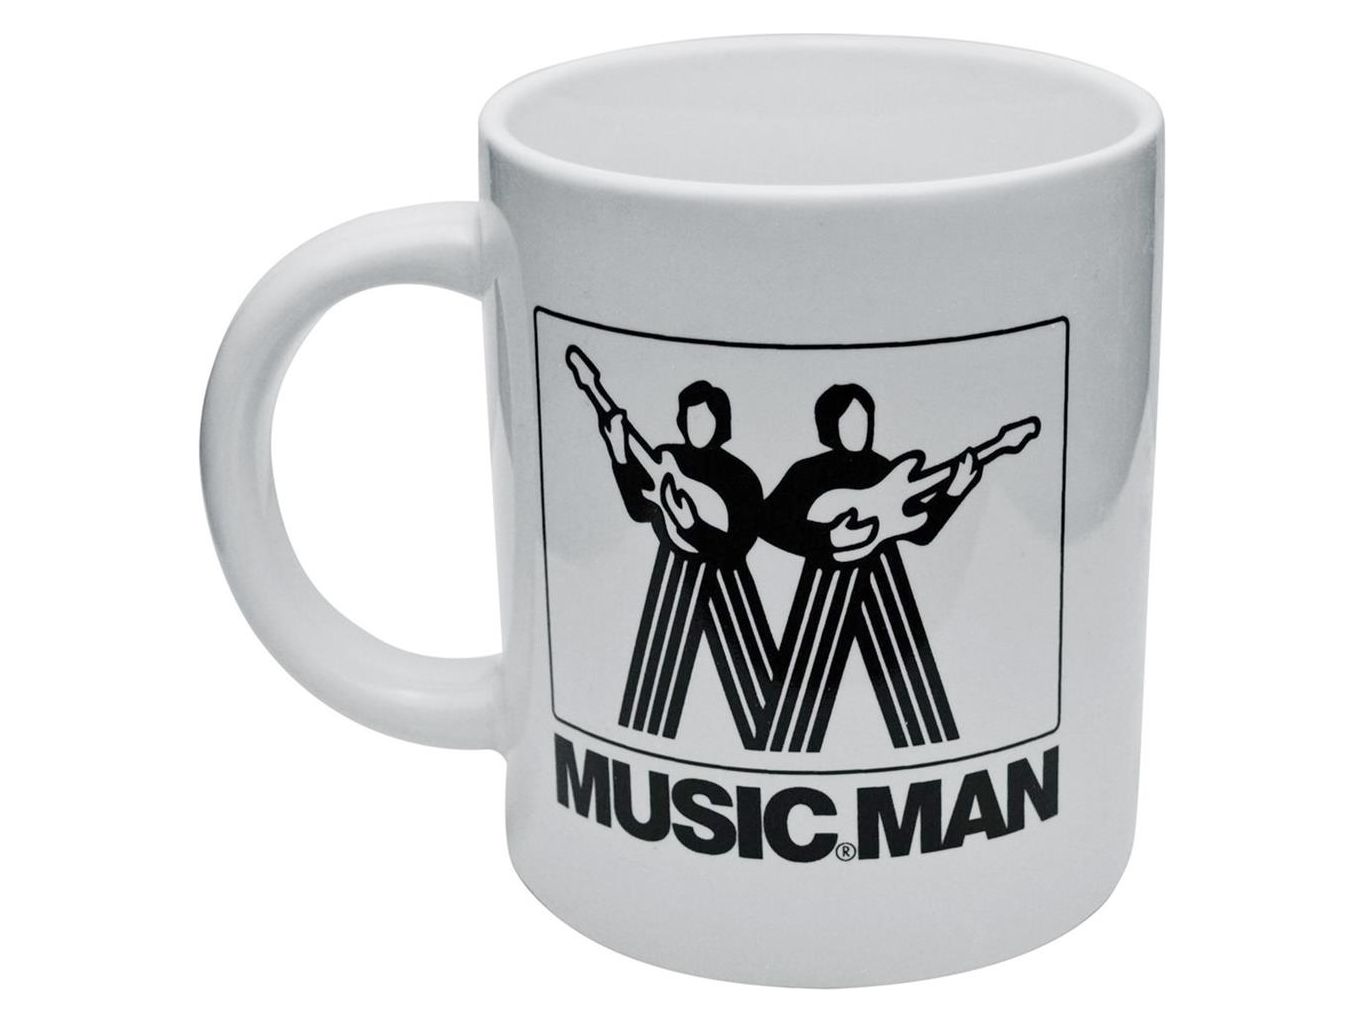 Ernie Ball Music Man Logo Mug